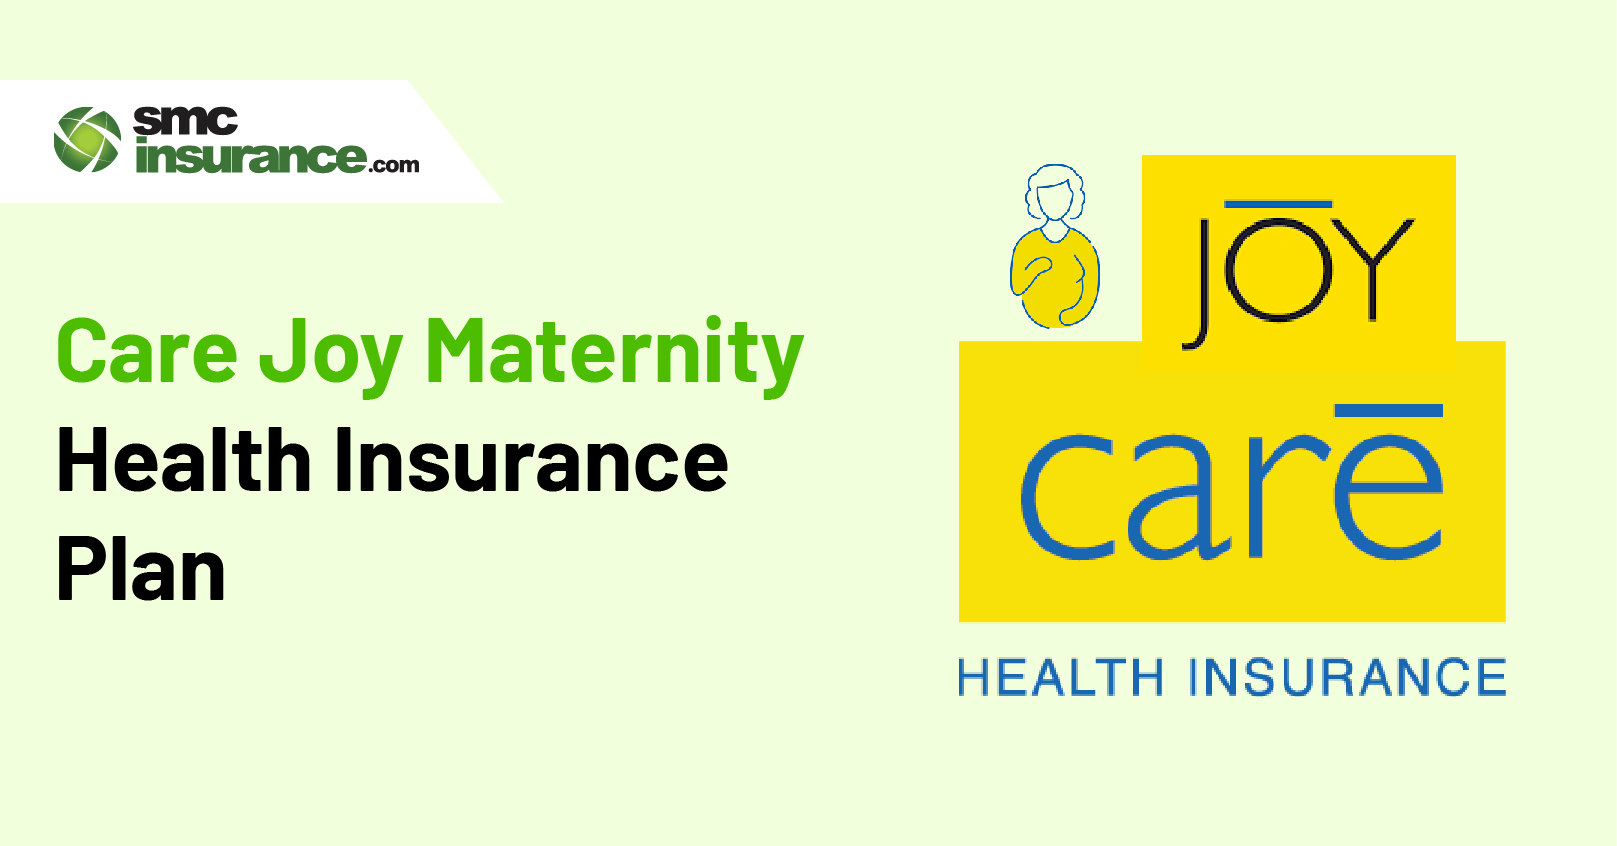 Care Joy Maternity Health Insurance Plan